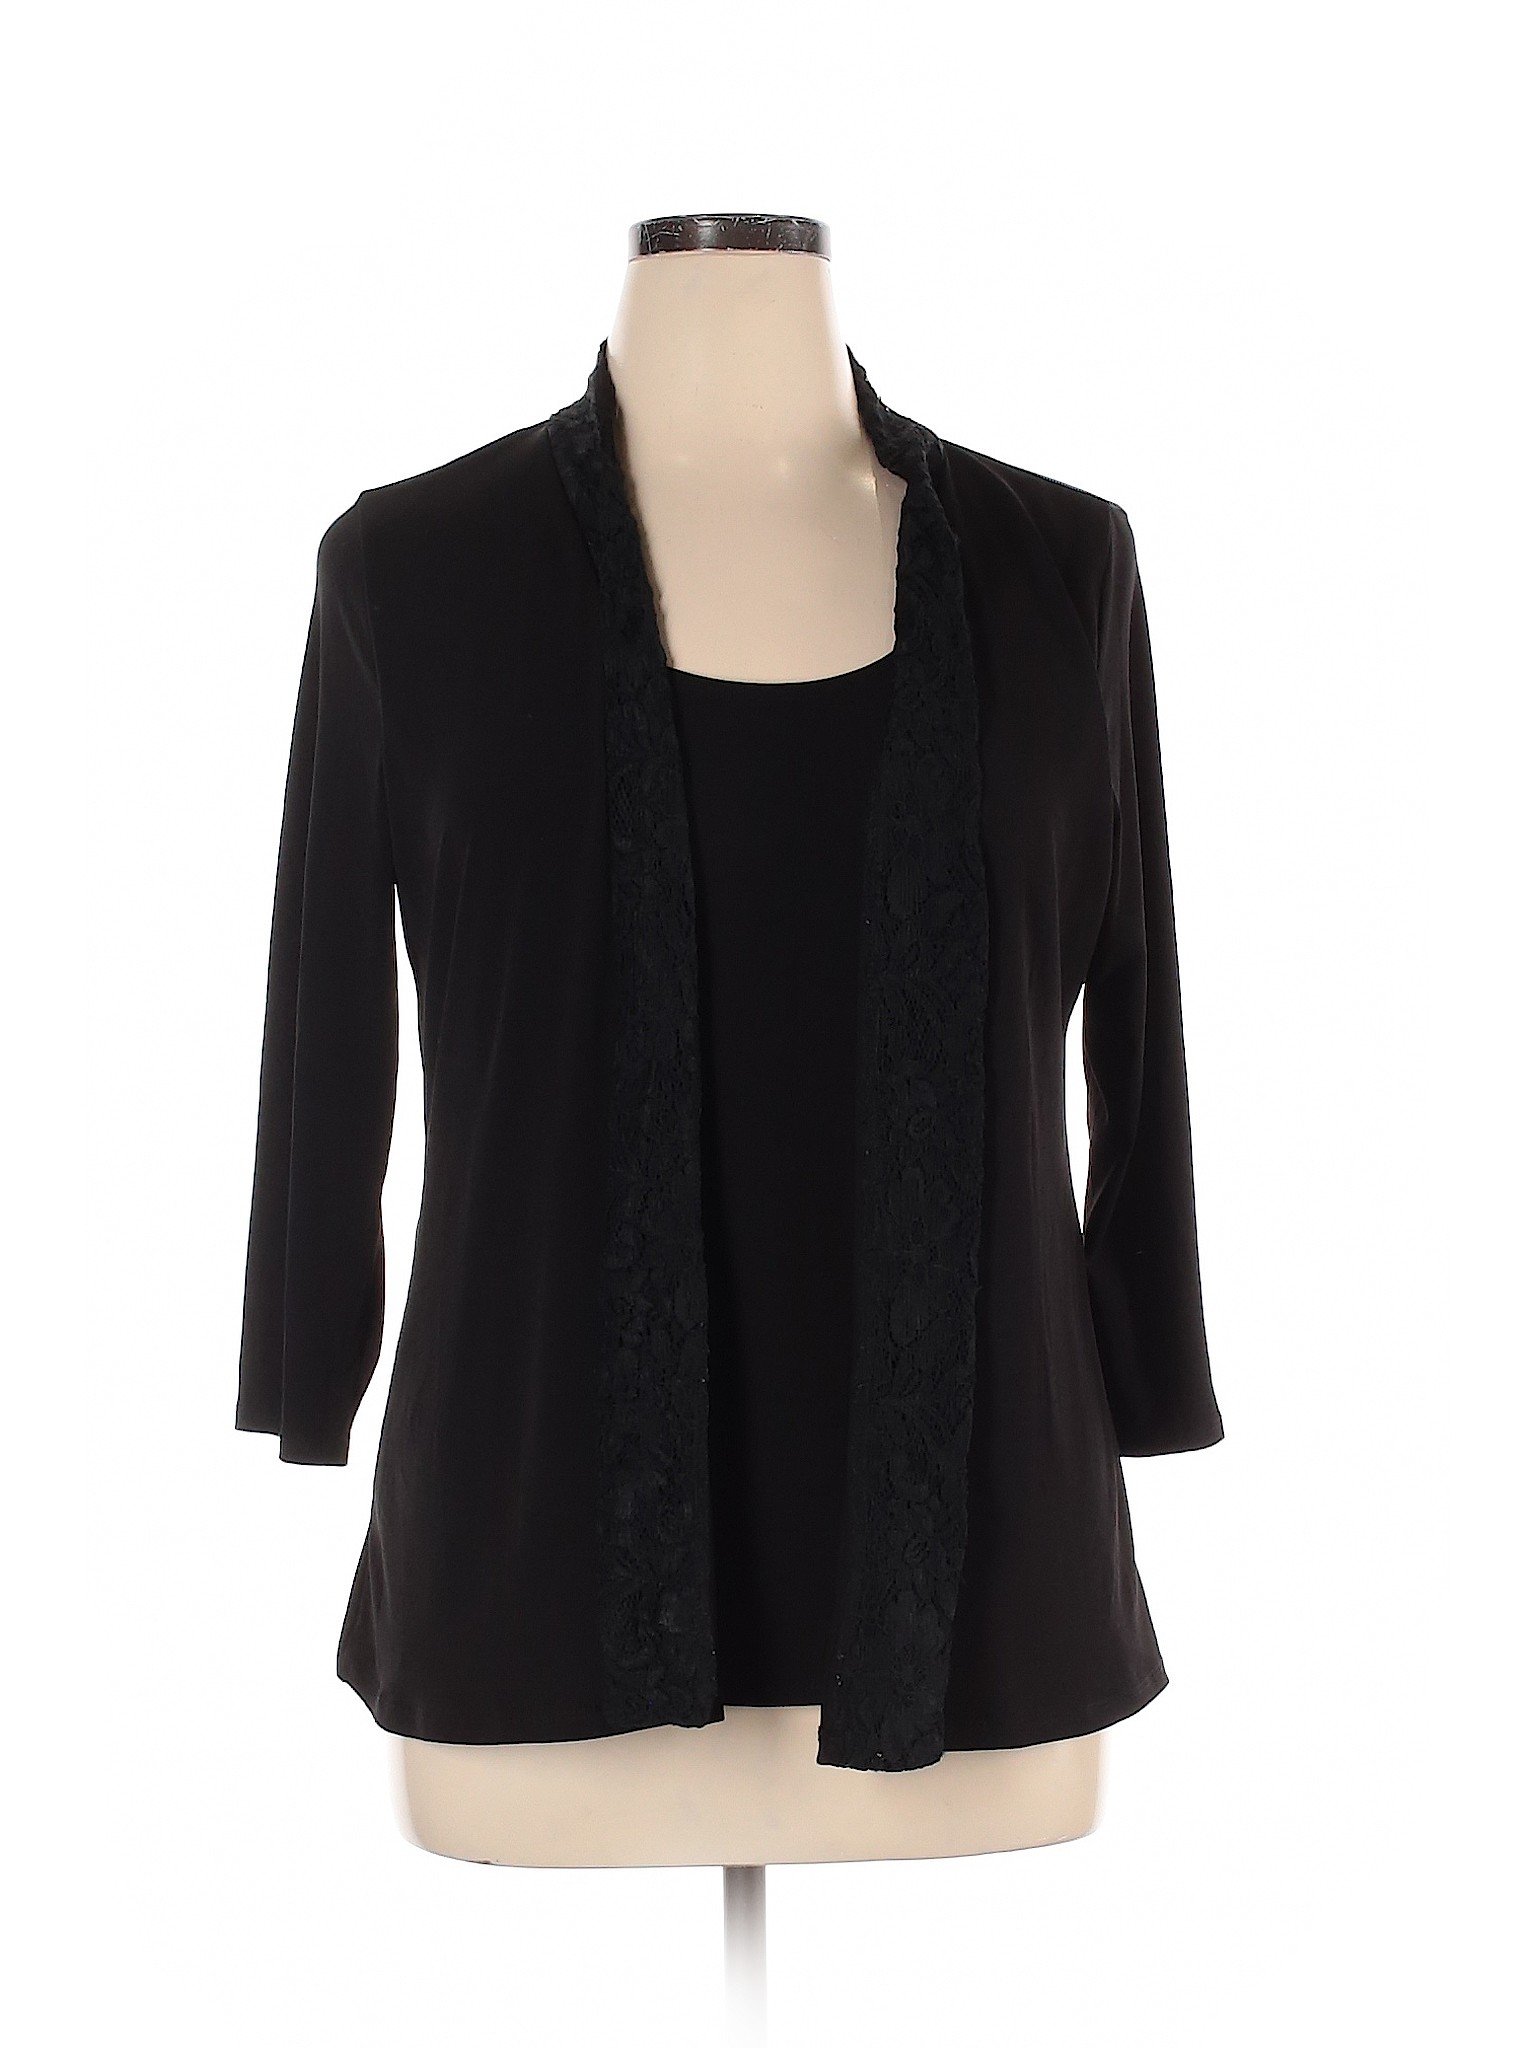 Liz McCoy Women Black Long Sleeve Top XL | eBay